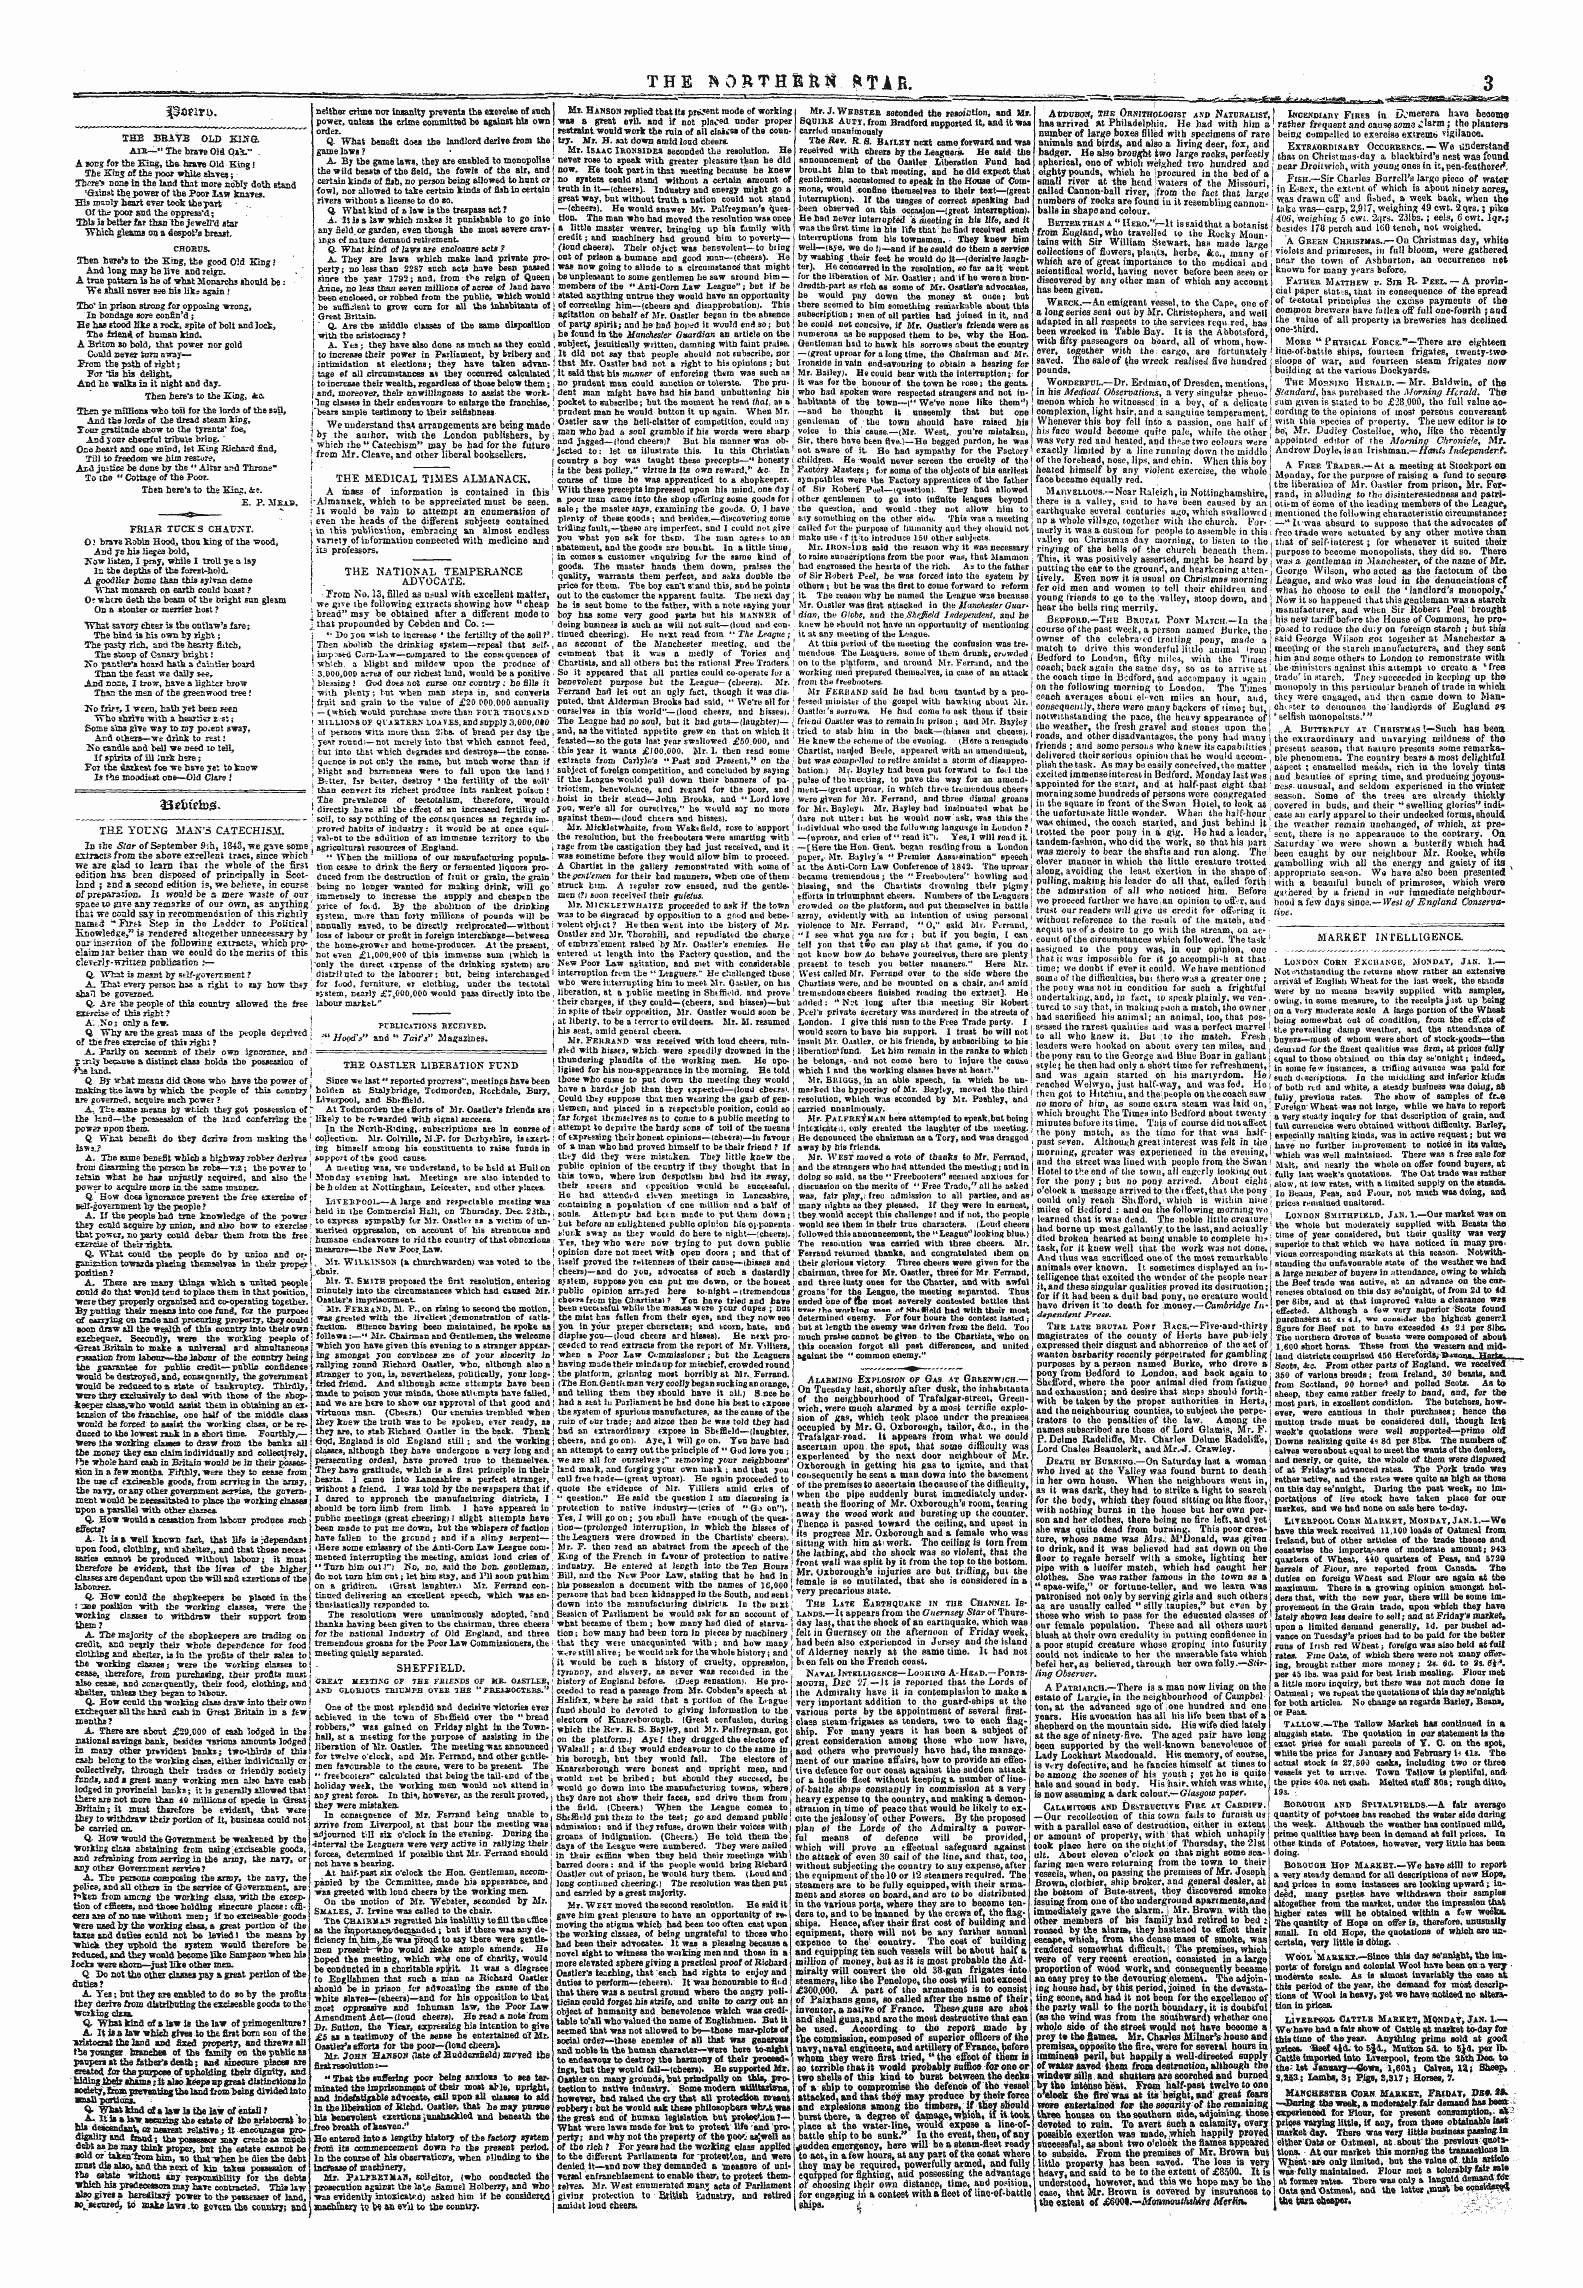 Northern Star (1837-1852): jS F Y, 1st edition - Ptirirg.